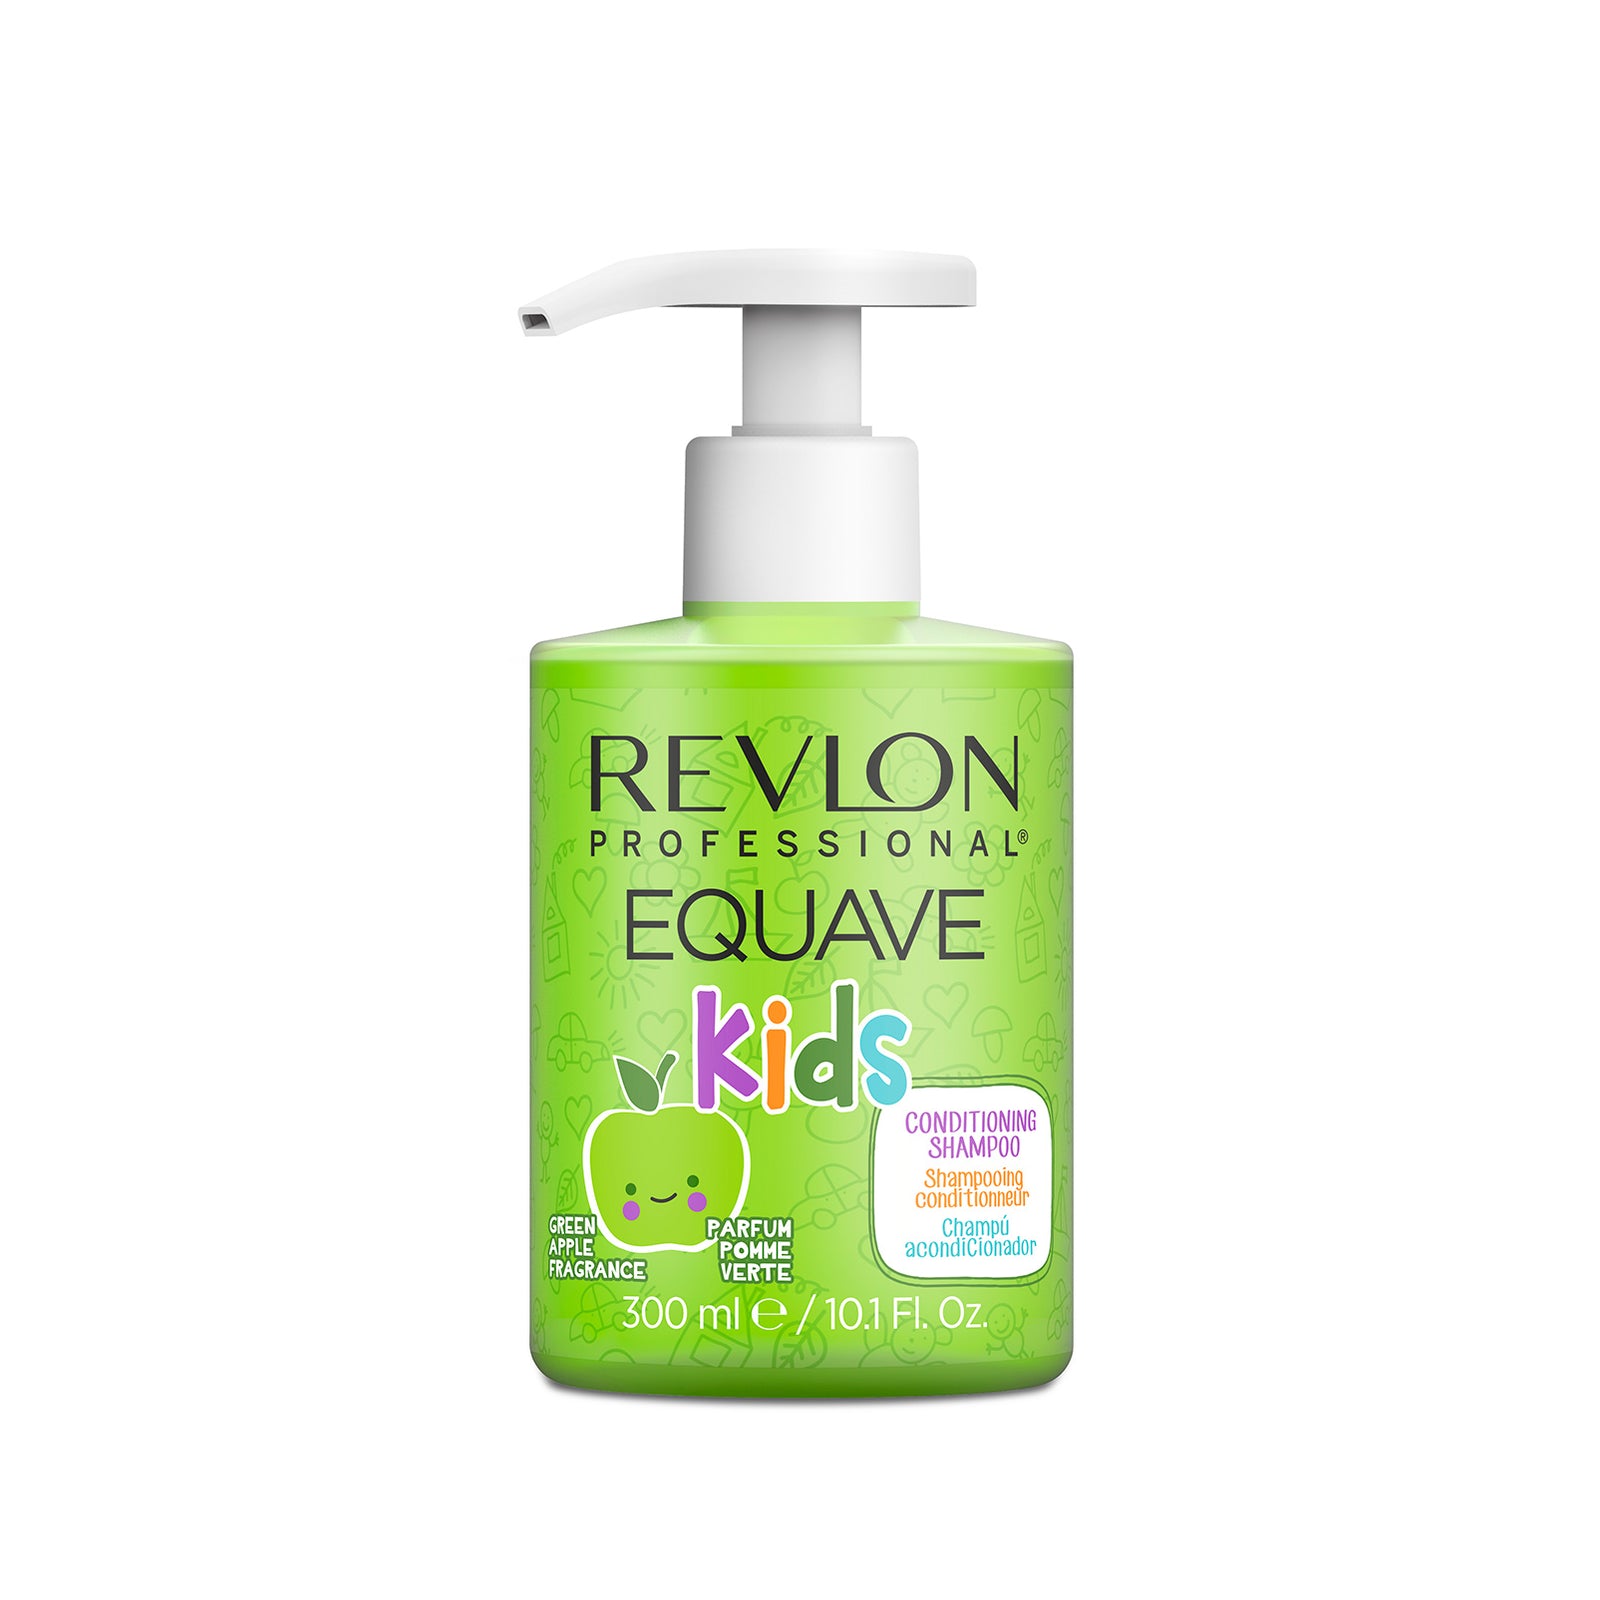 Kids Equave Conditioning Shampoo 300ml - Apple